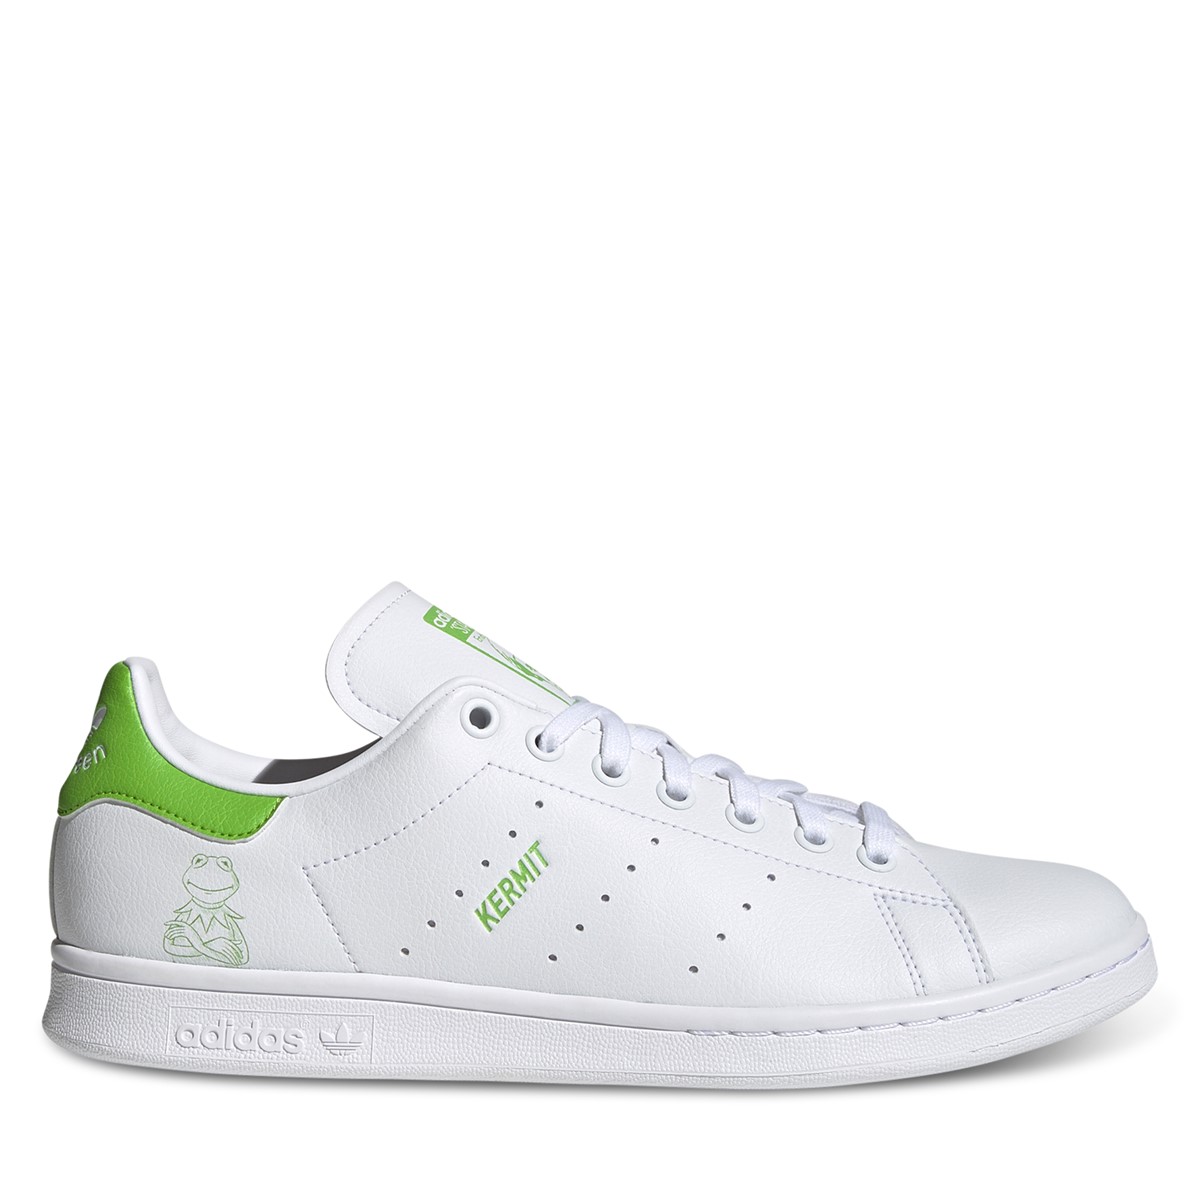 Kermit the Frog x adidas Stan Smith Sneakers White/Green Little Burgundy